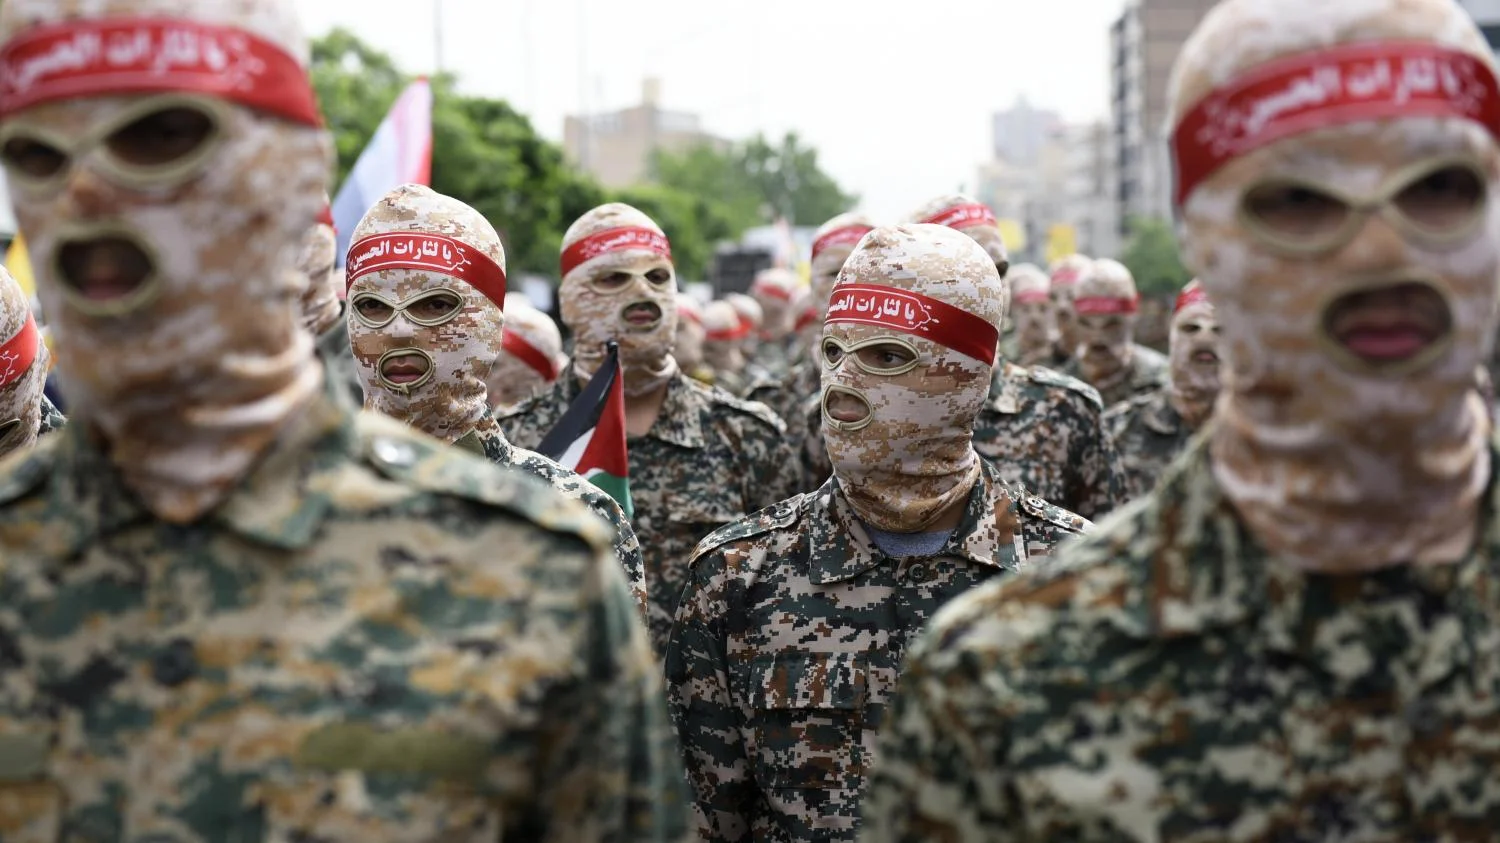 Islamic-Revolutionary-Guard-Corps-IRGC-terrorist-organization